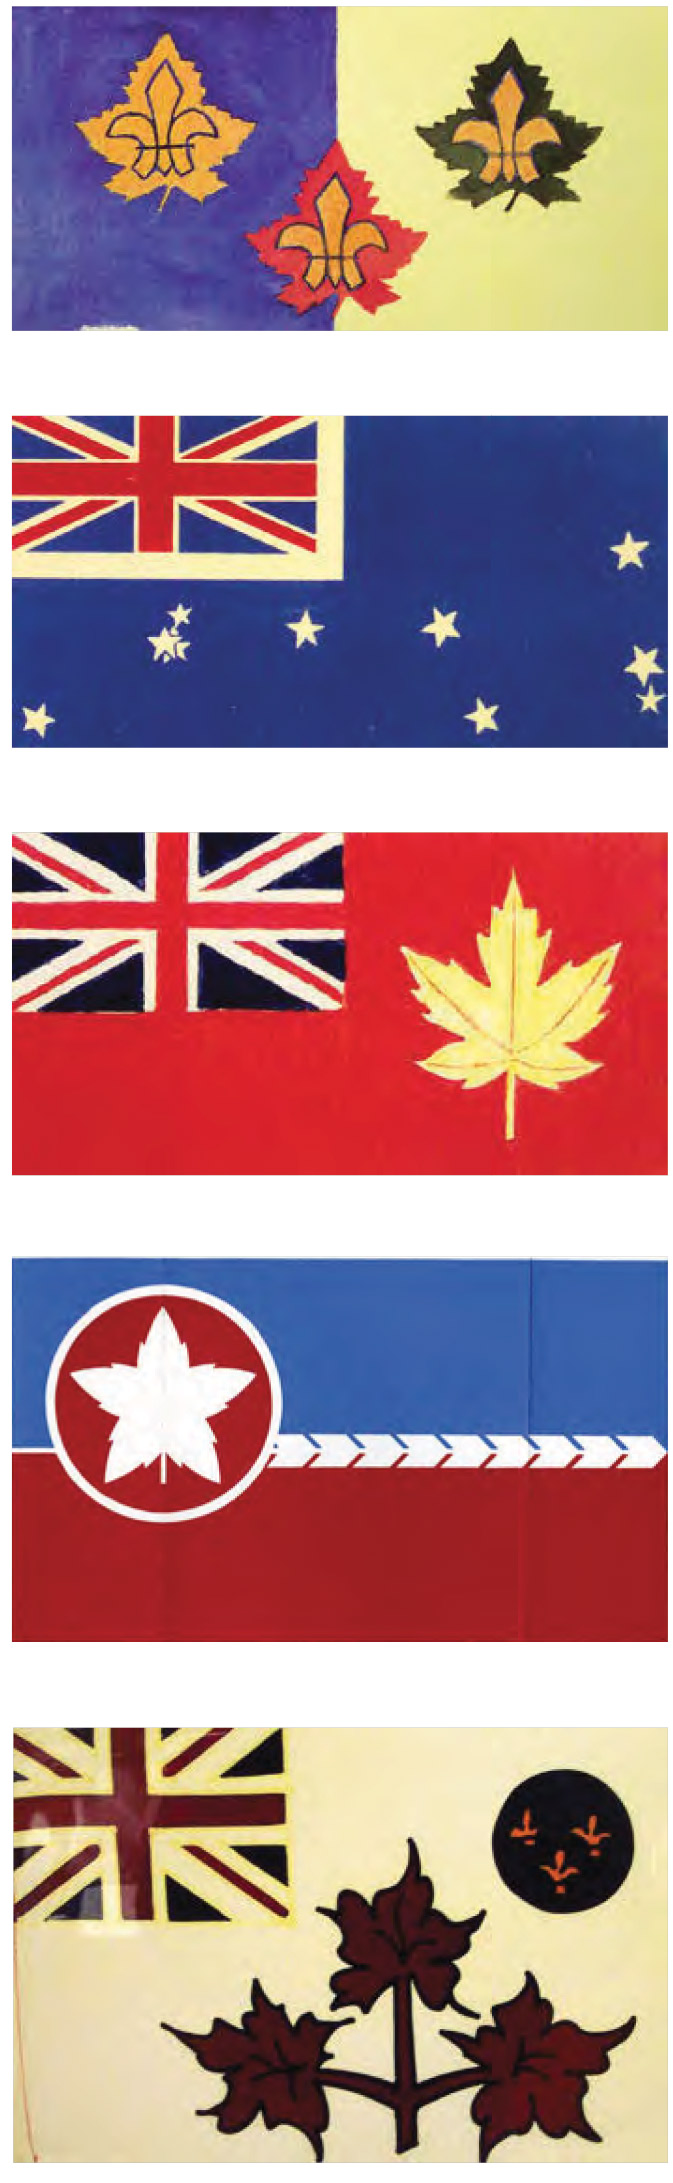 Timeline: Canada's National Flag 